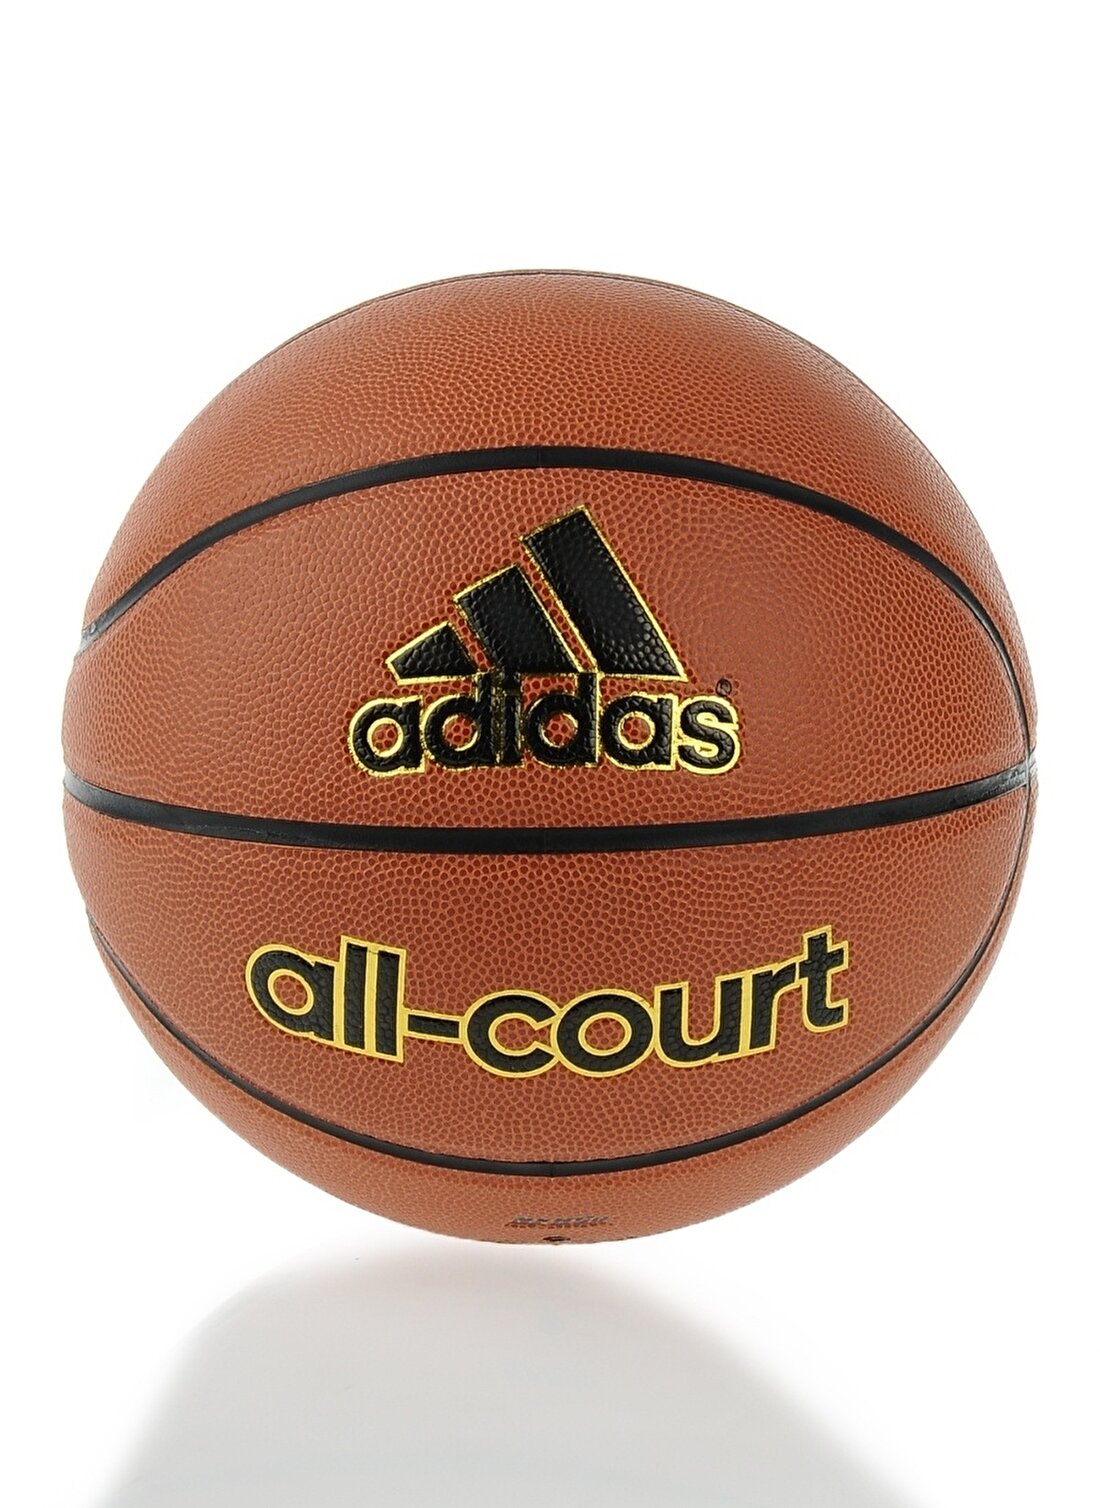 Adidas X35859 All Court Basketbol Topu